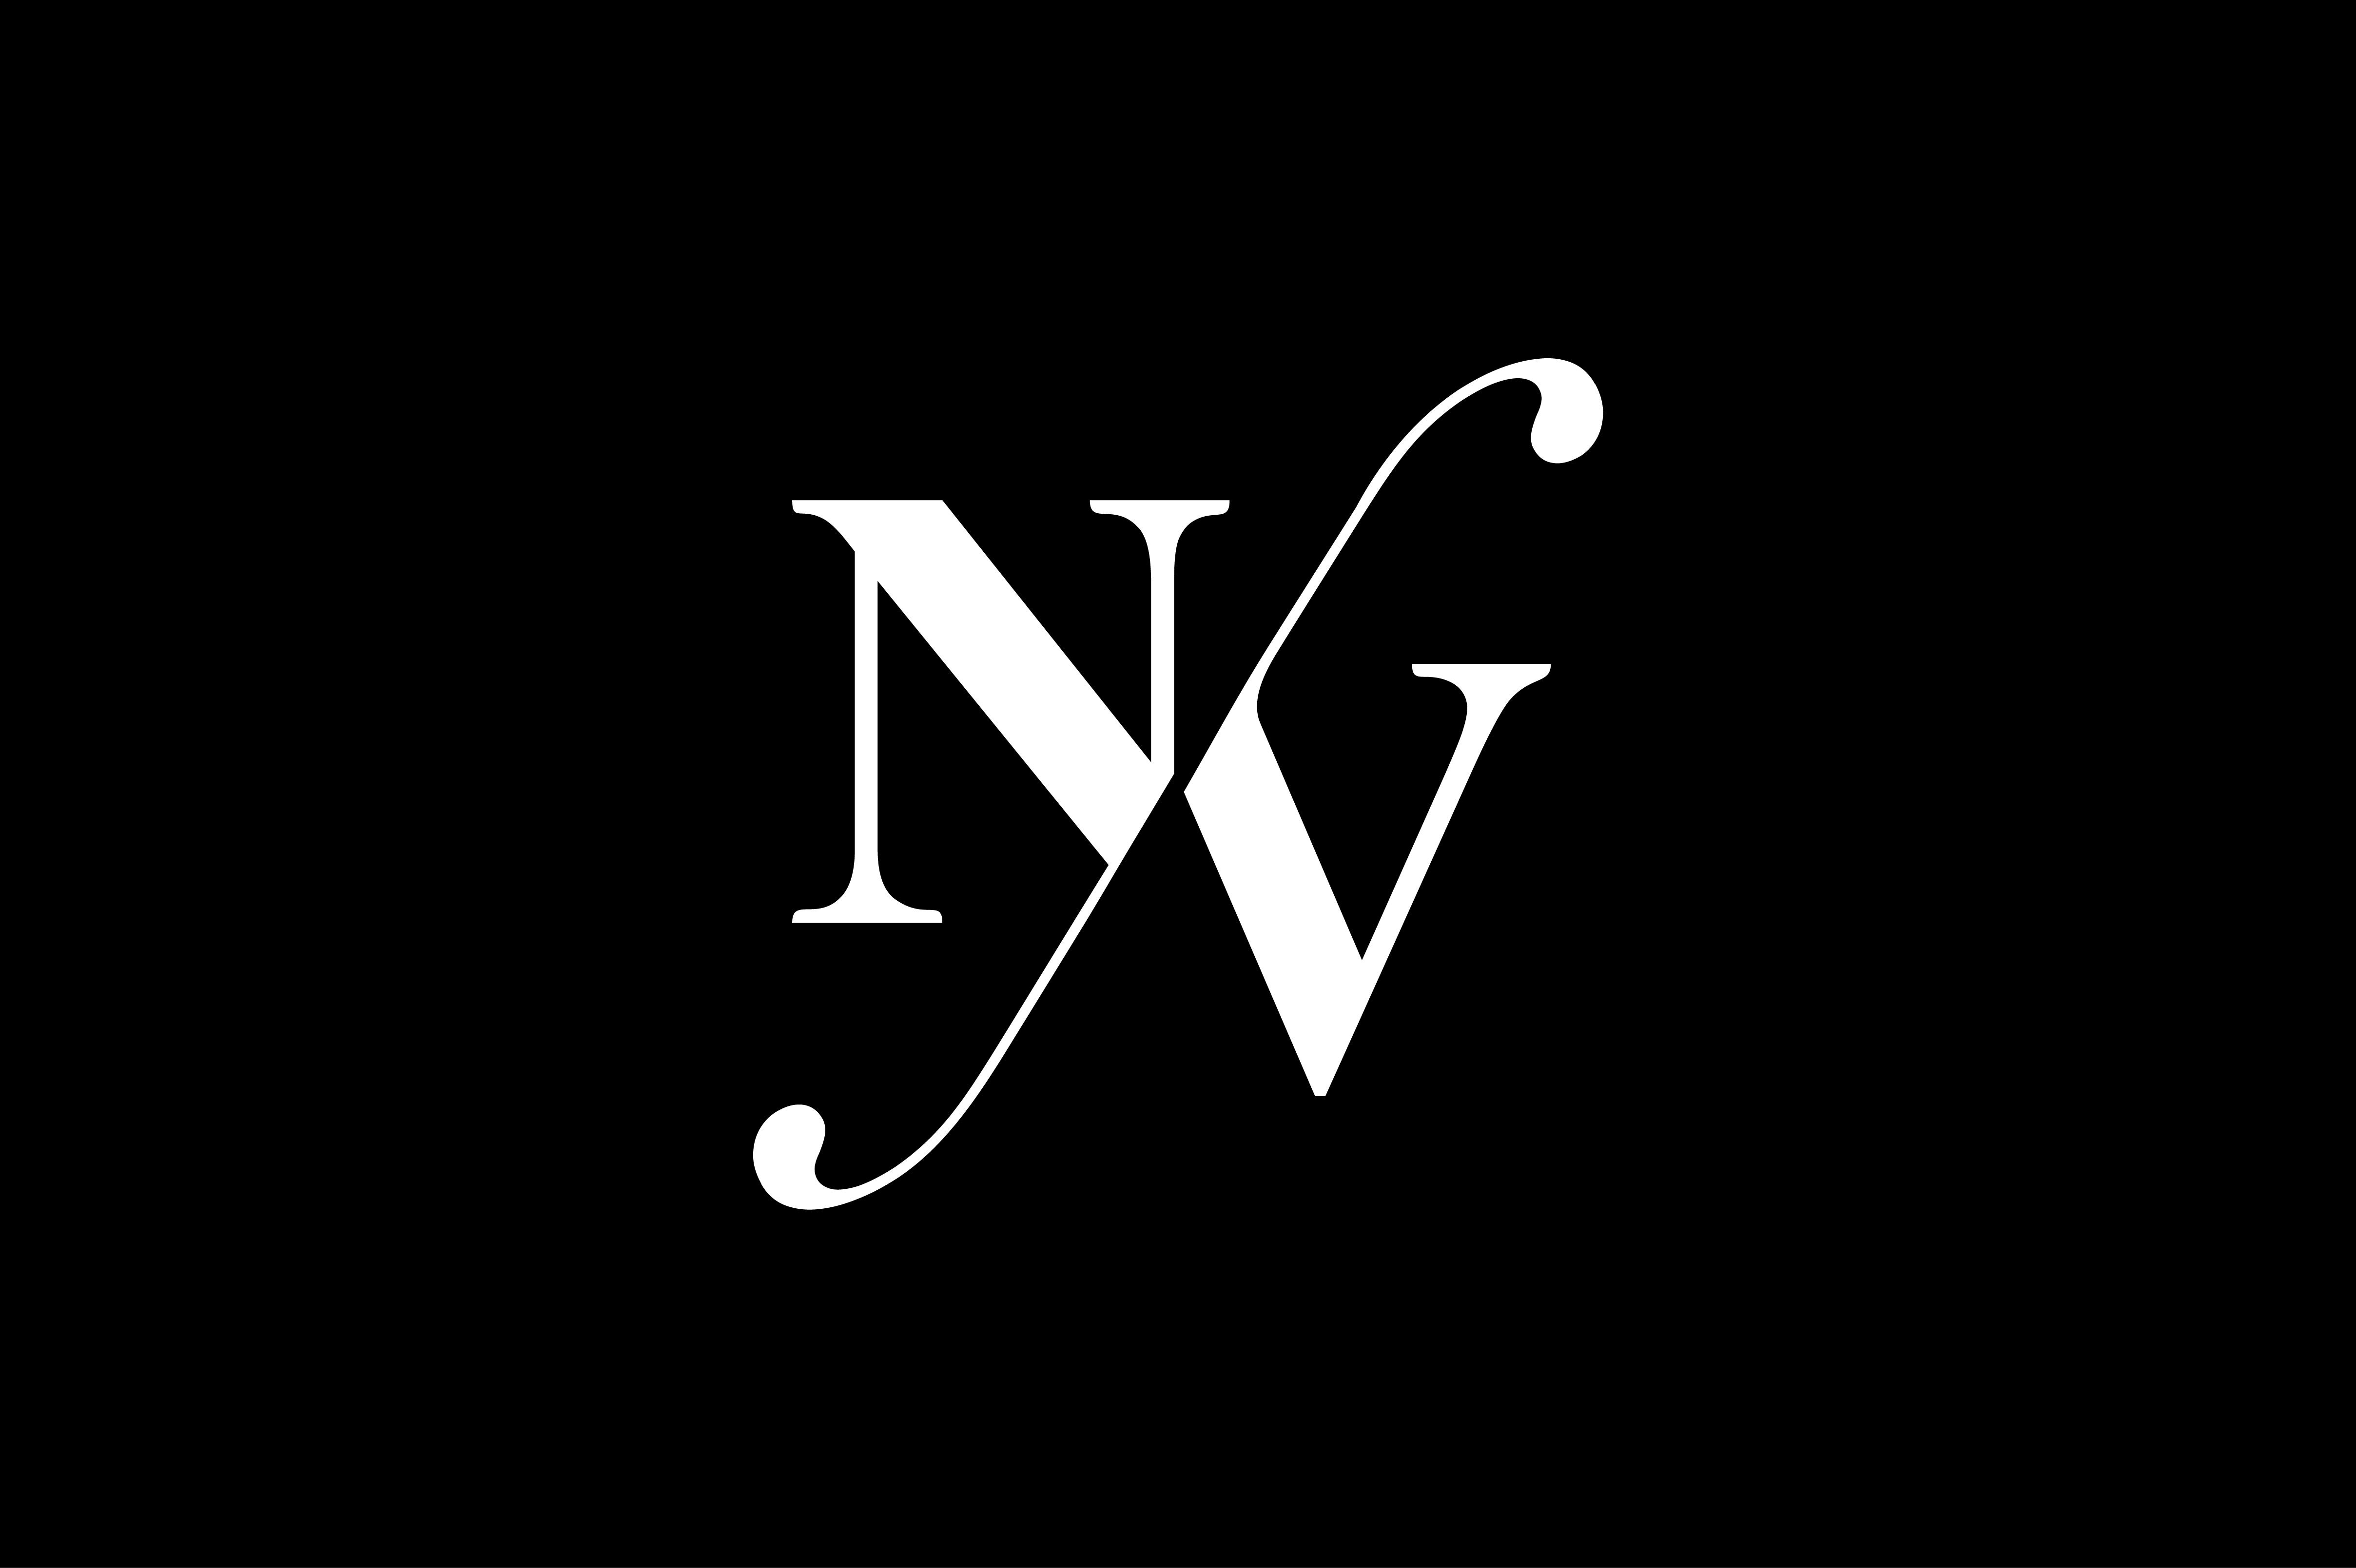 NV Monogram Logo design By Vectorseller | TheHungryJPEG.com